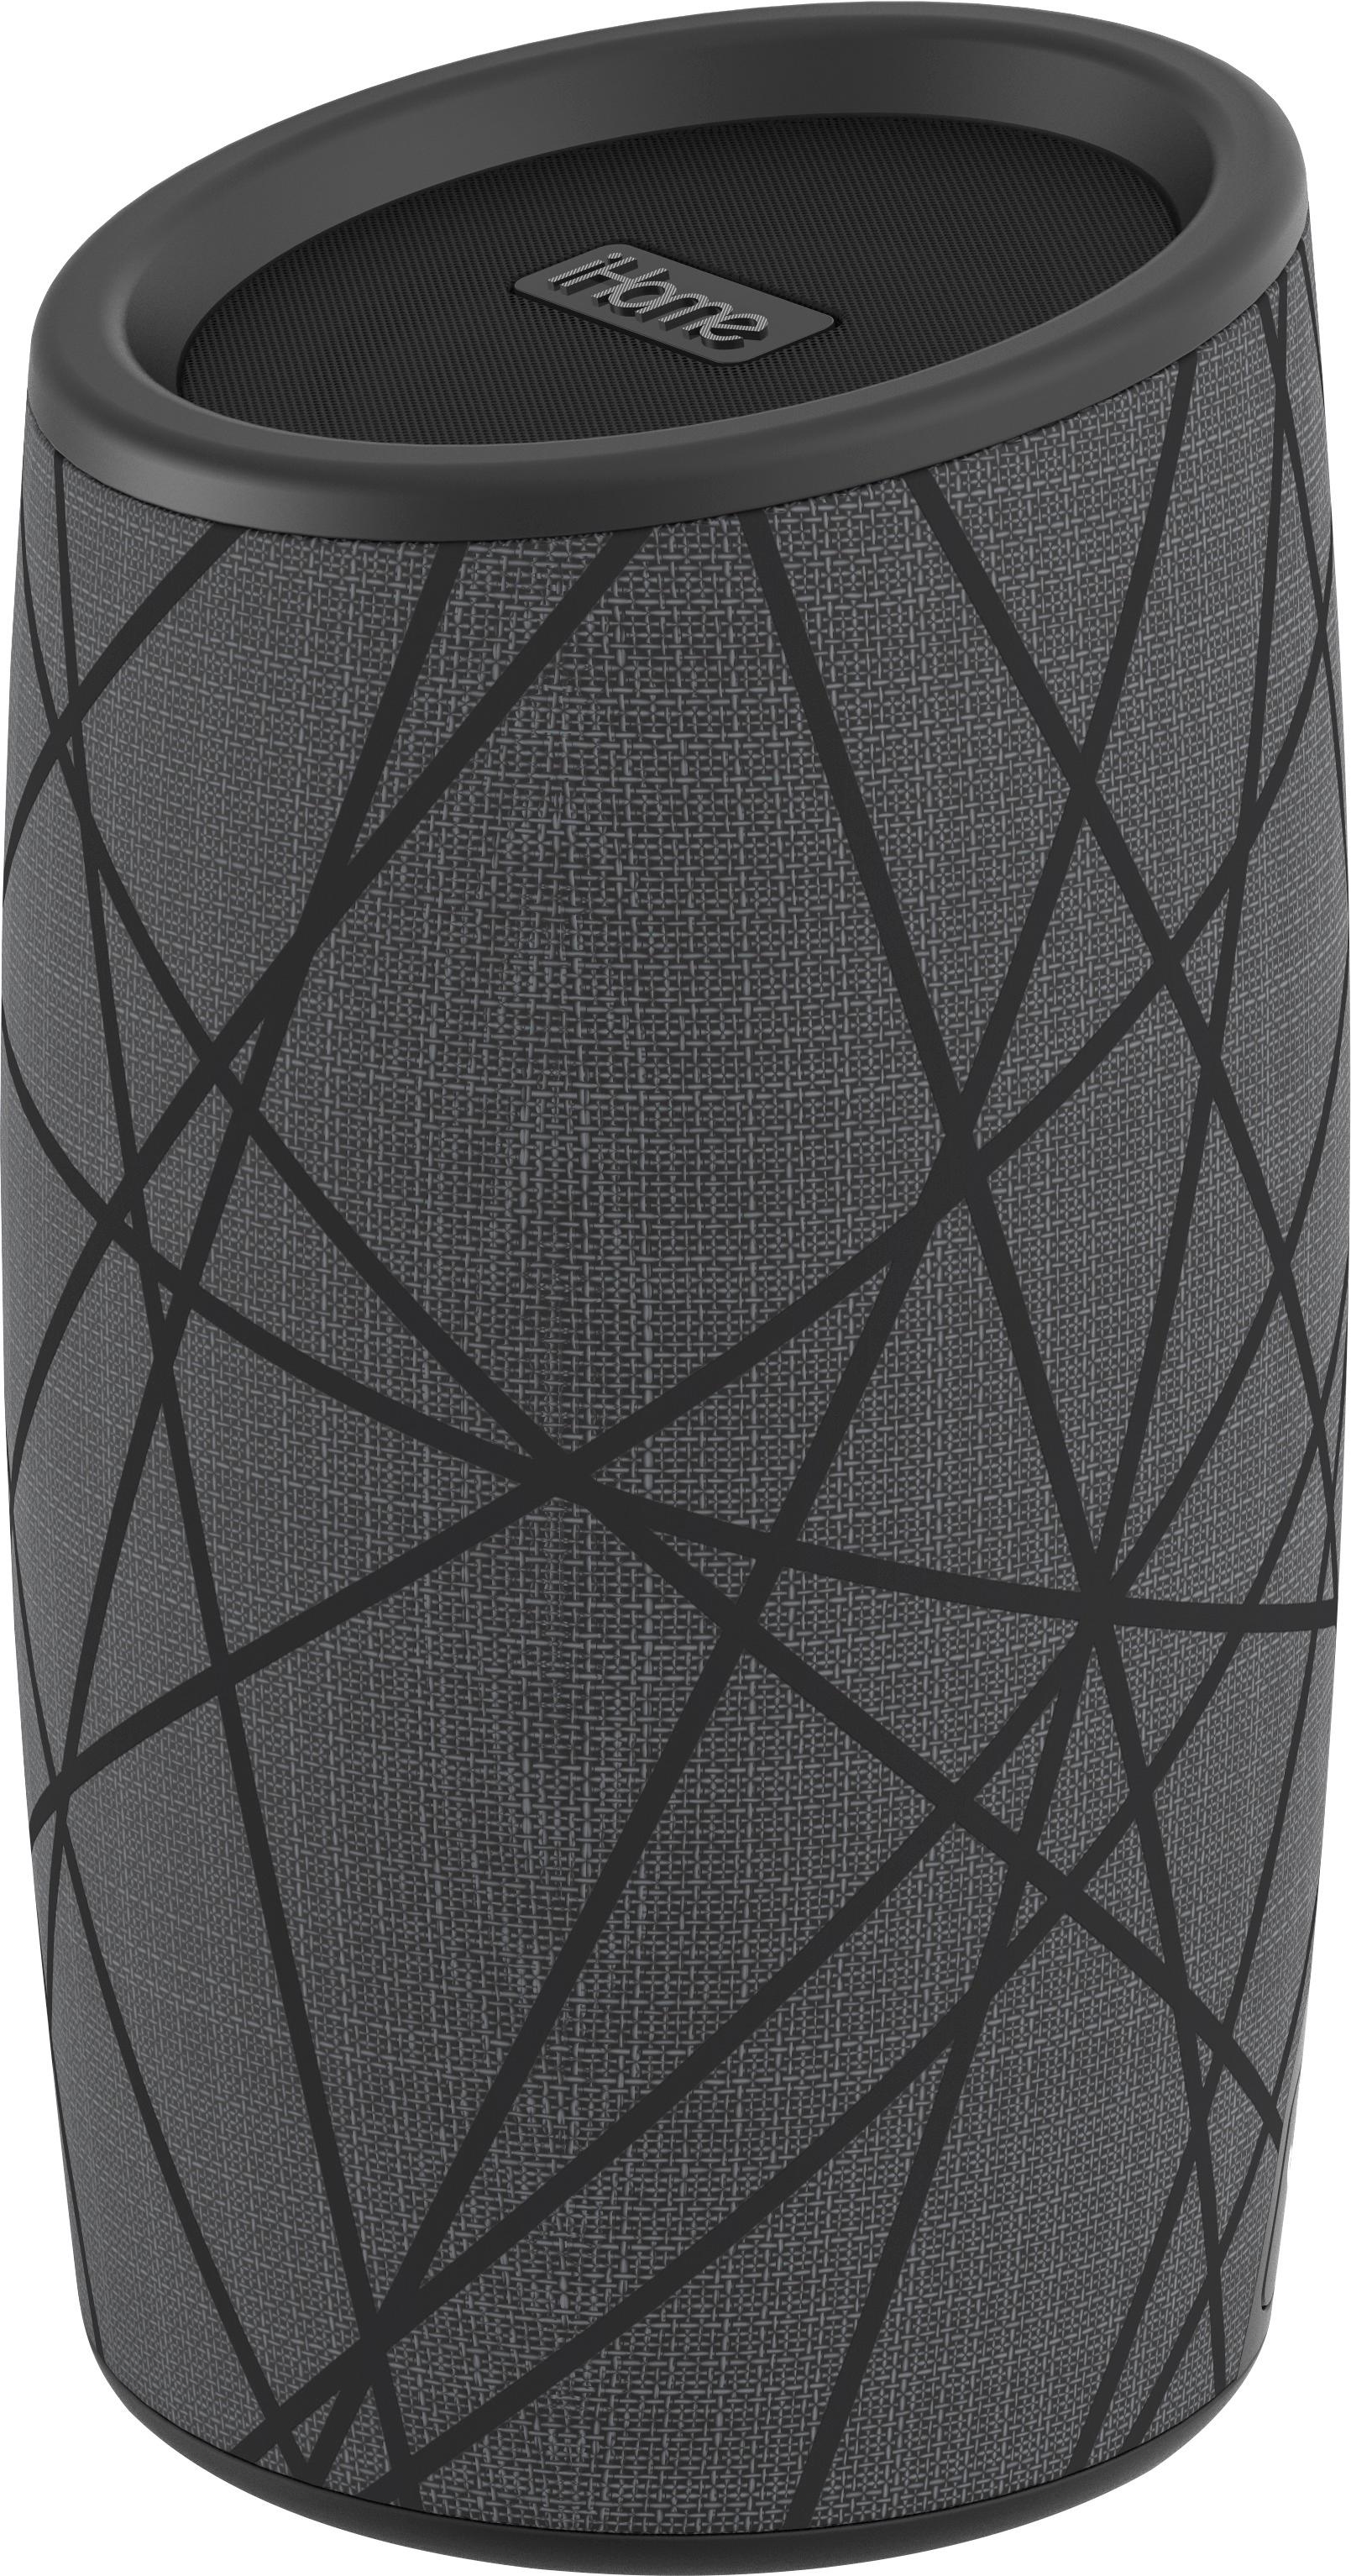 ihome speaker acoustical knit